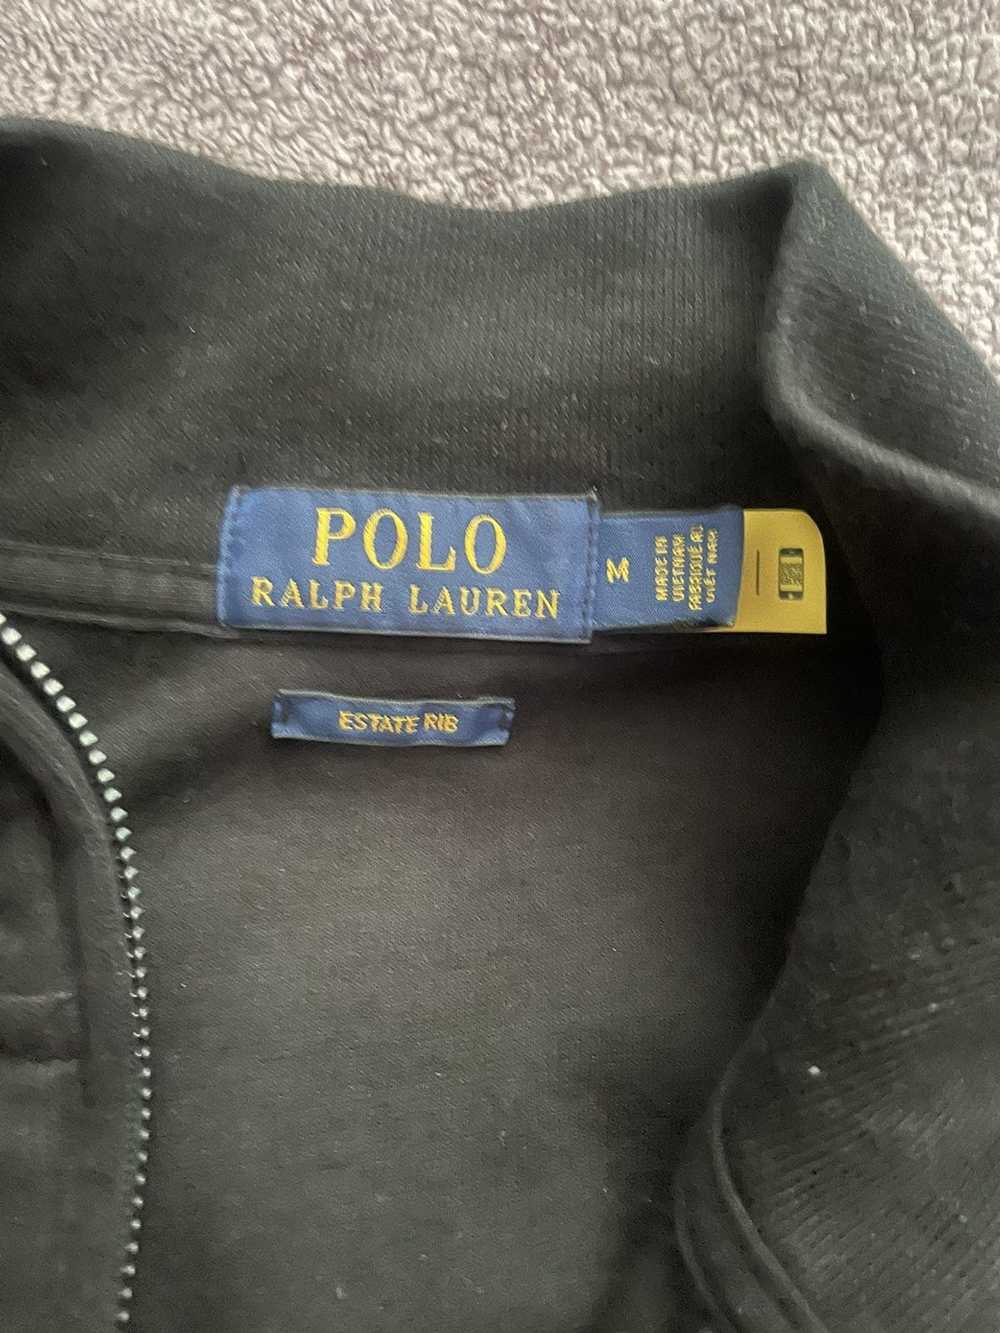 Polo Ralph Lauren Polo Ralph Lauren pullover - image 4